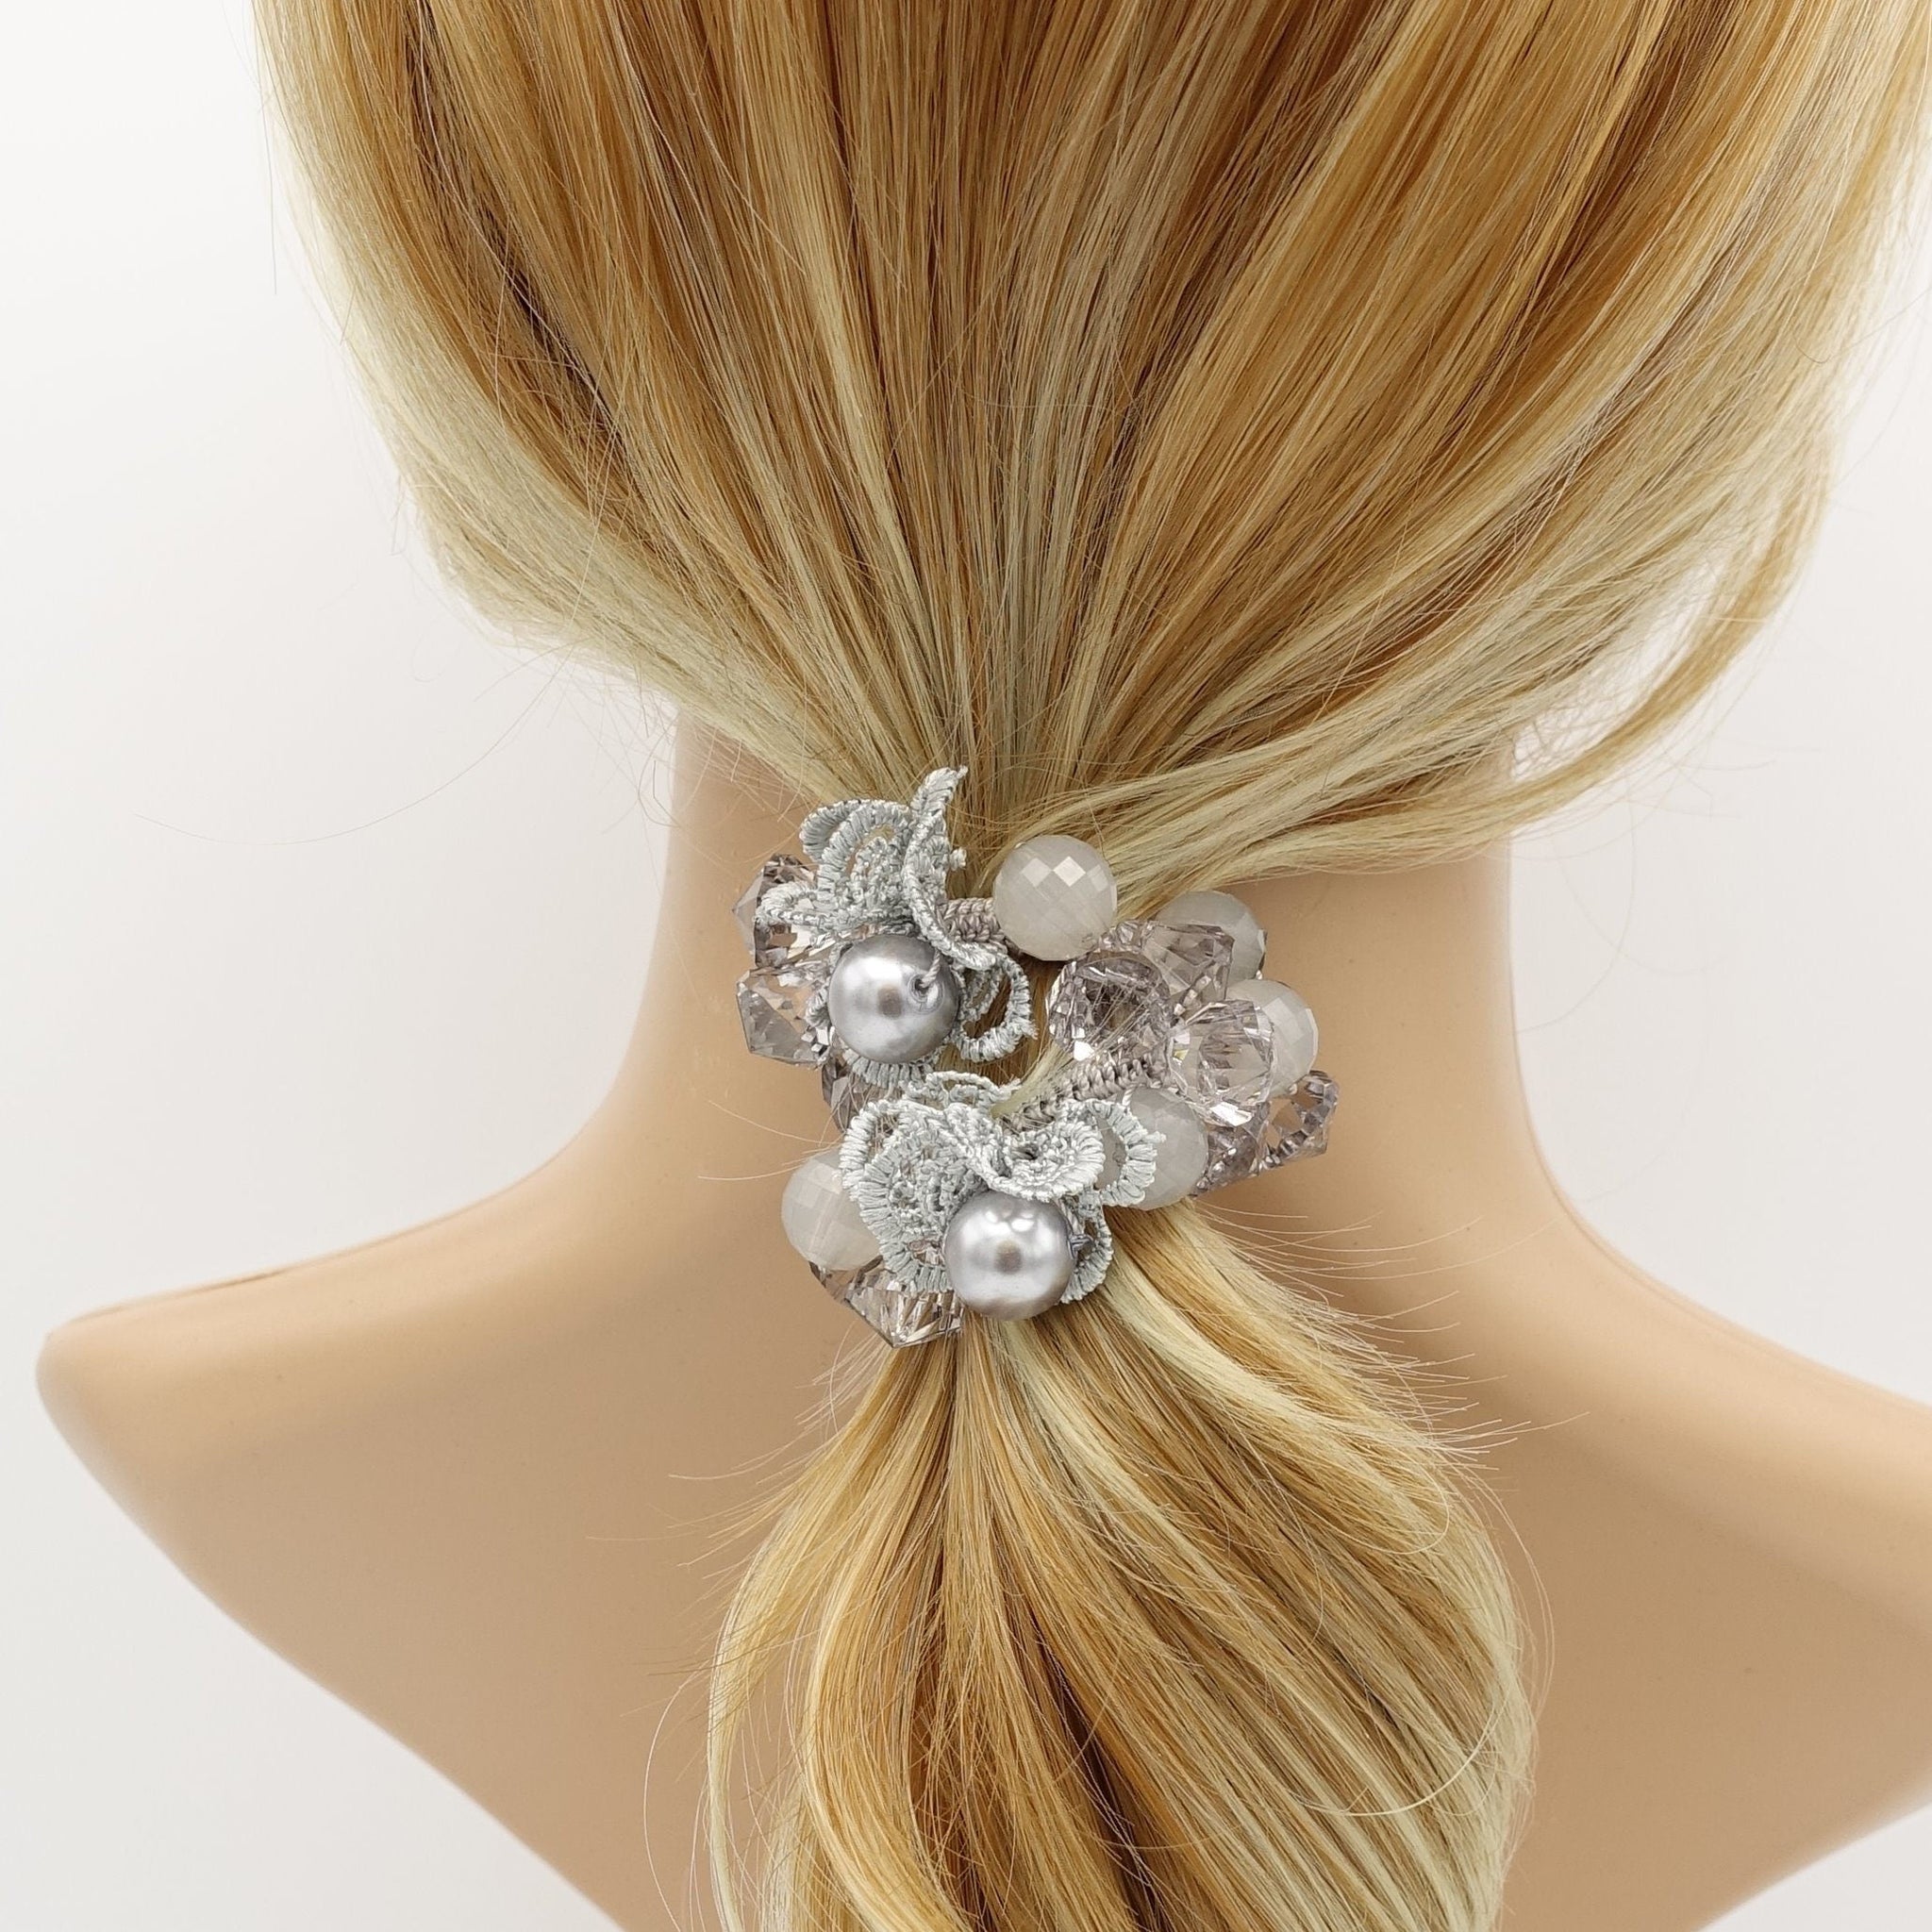 veryshine.com Ponytail holders lace acrylic ball beaded hair elastic ponytail holder women hair accessory